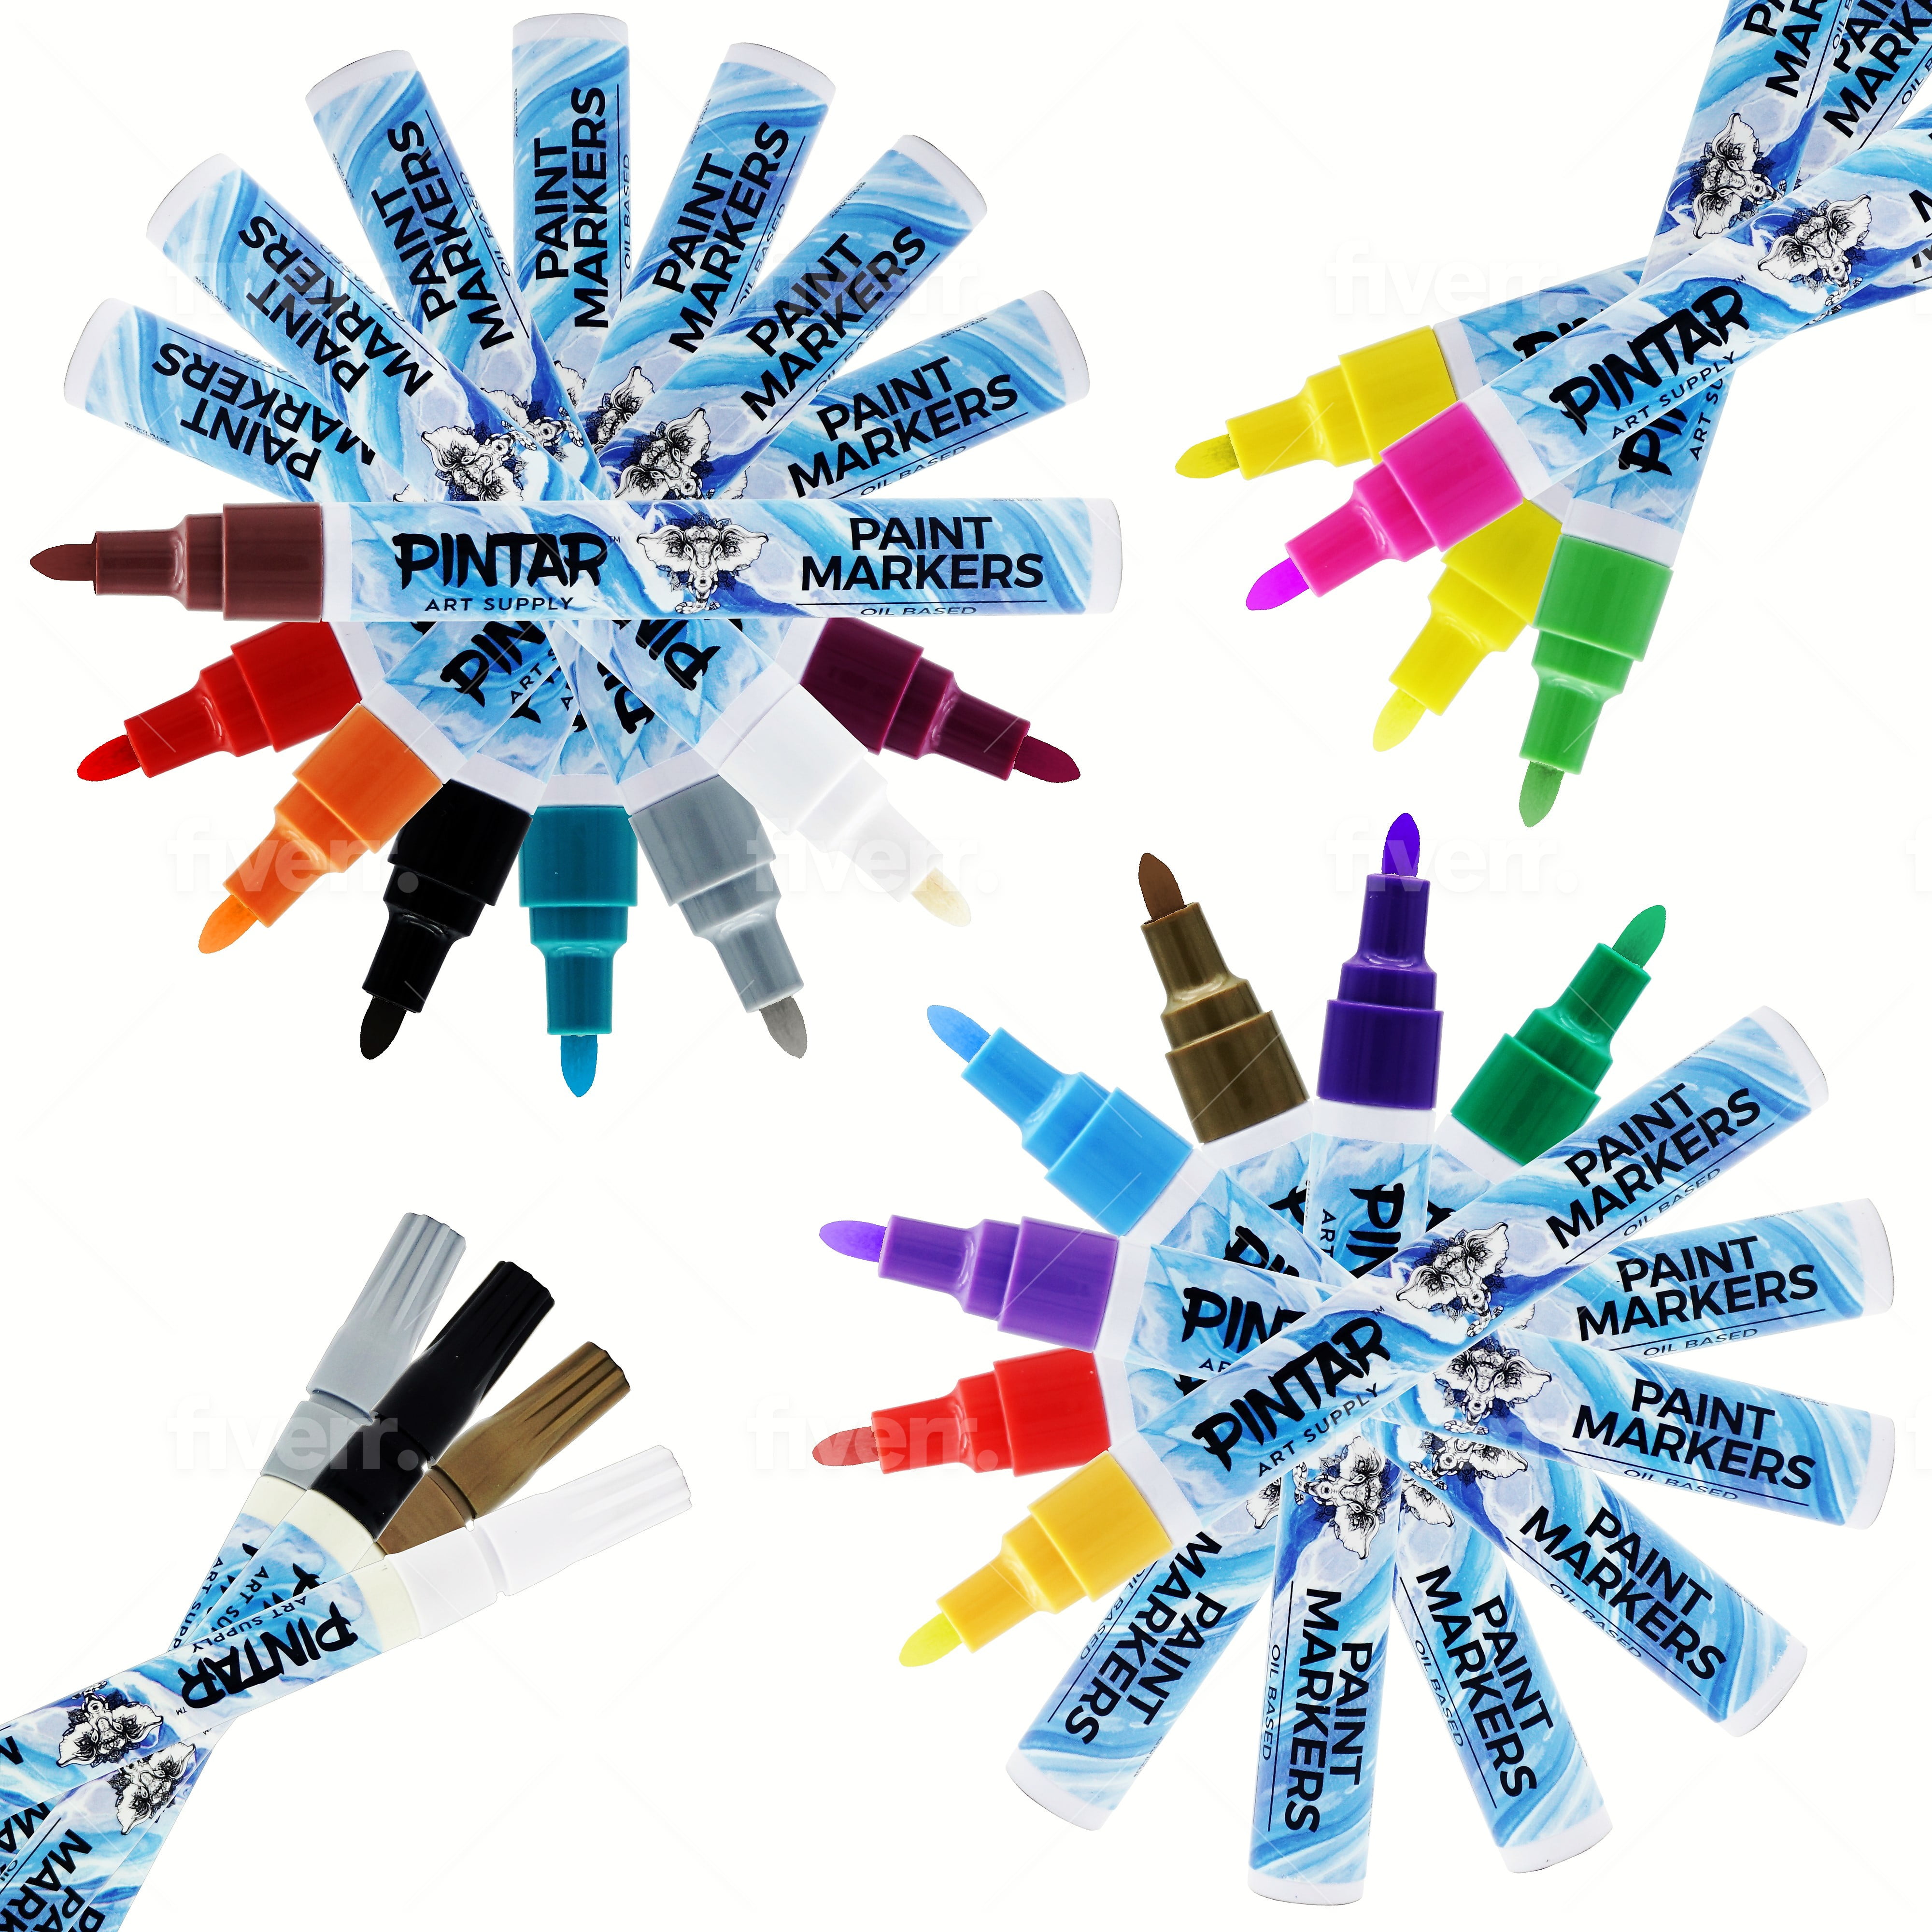 Stream Acrylic Pens For Painting - Pintar Art Supply by Pintarartsupply